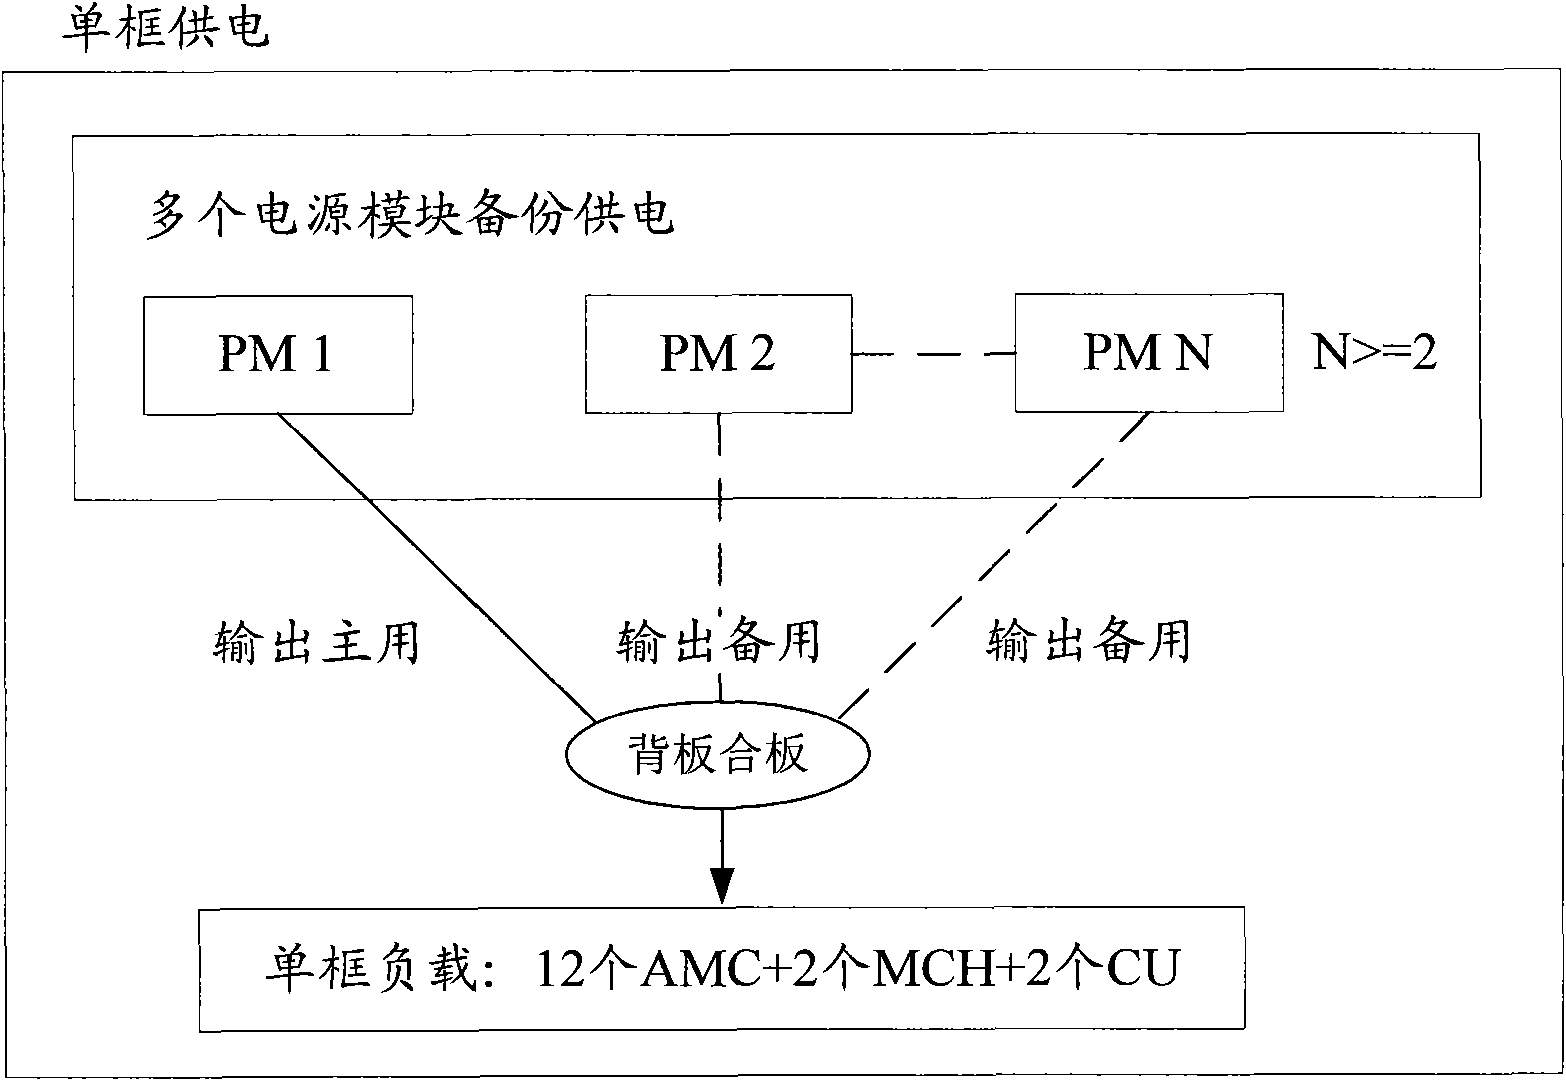 MicroTCA (micro telecom computing architecture) system